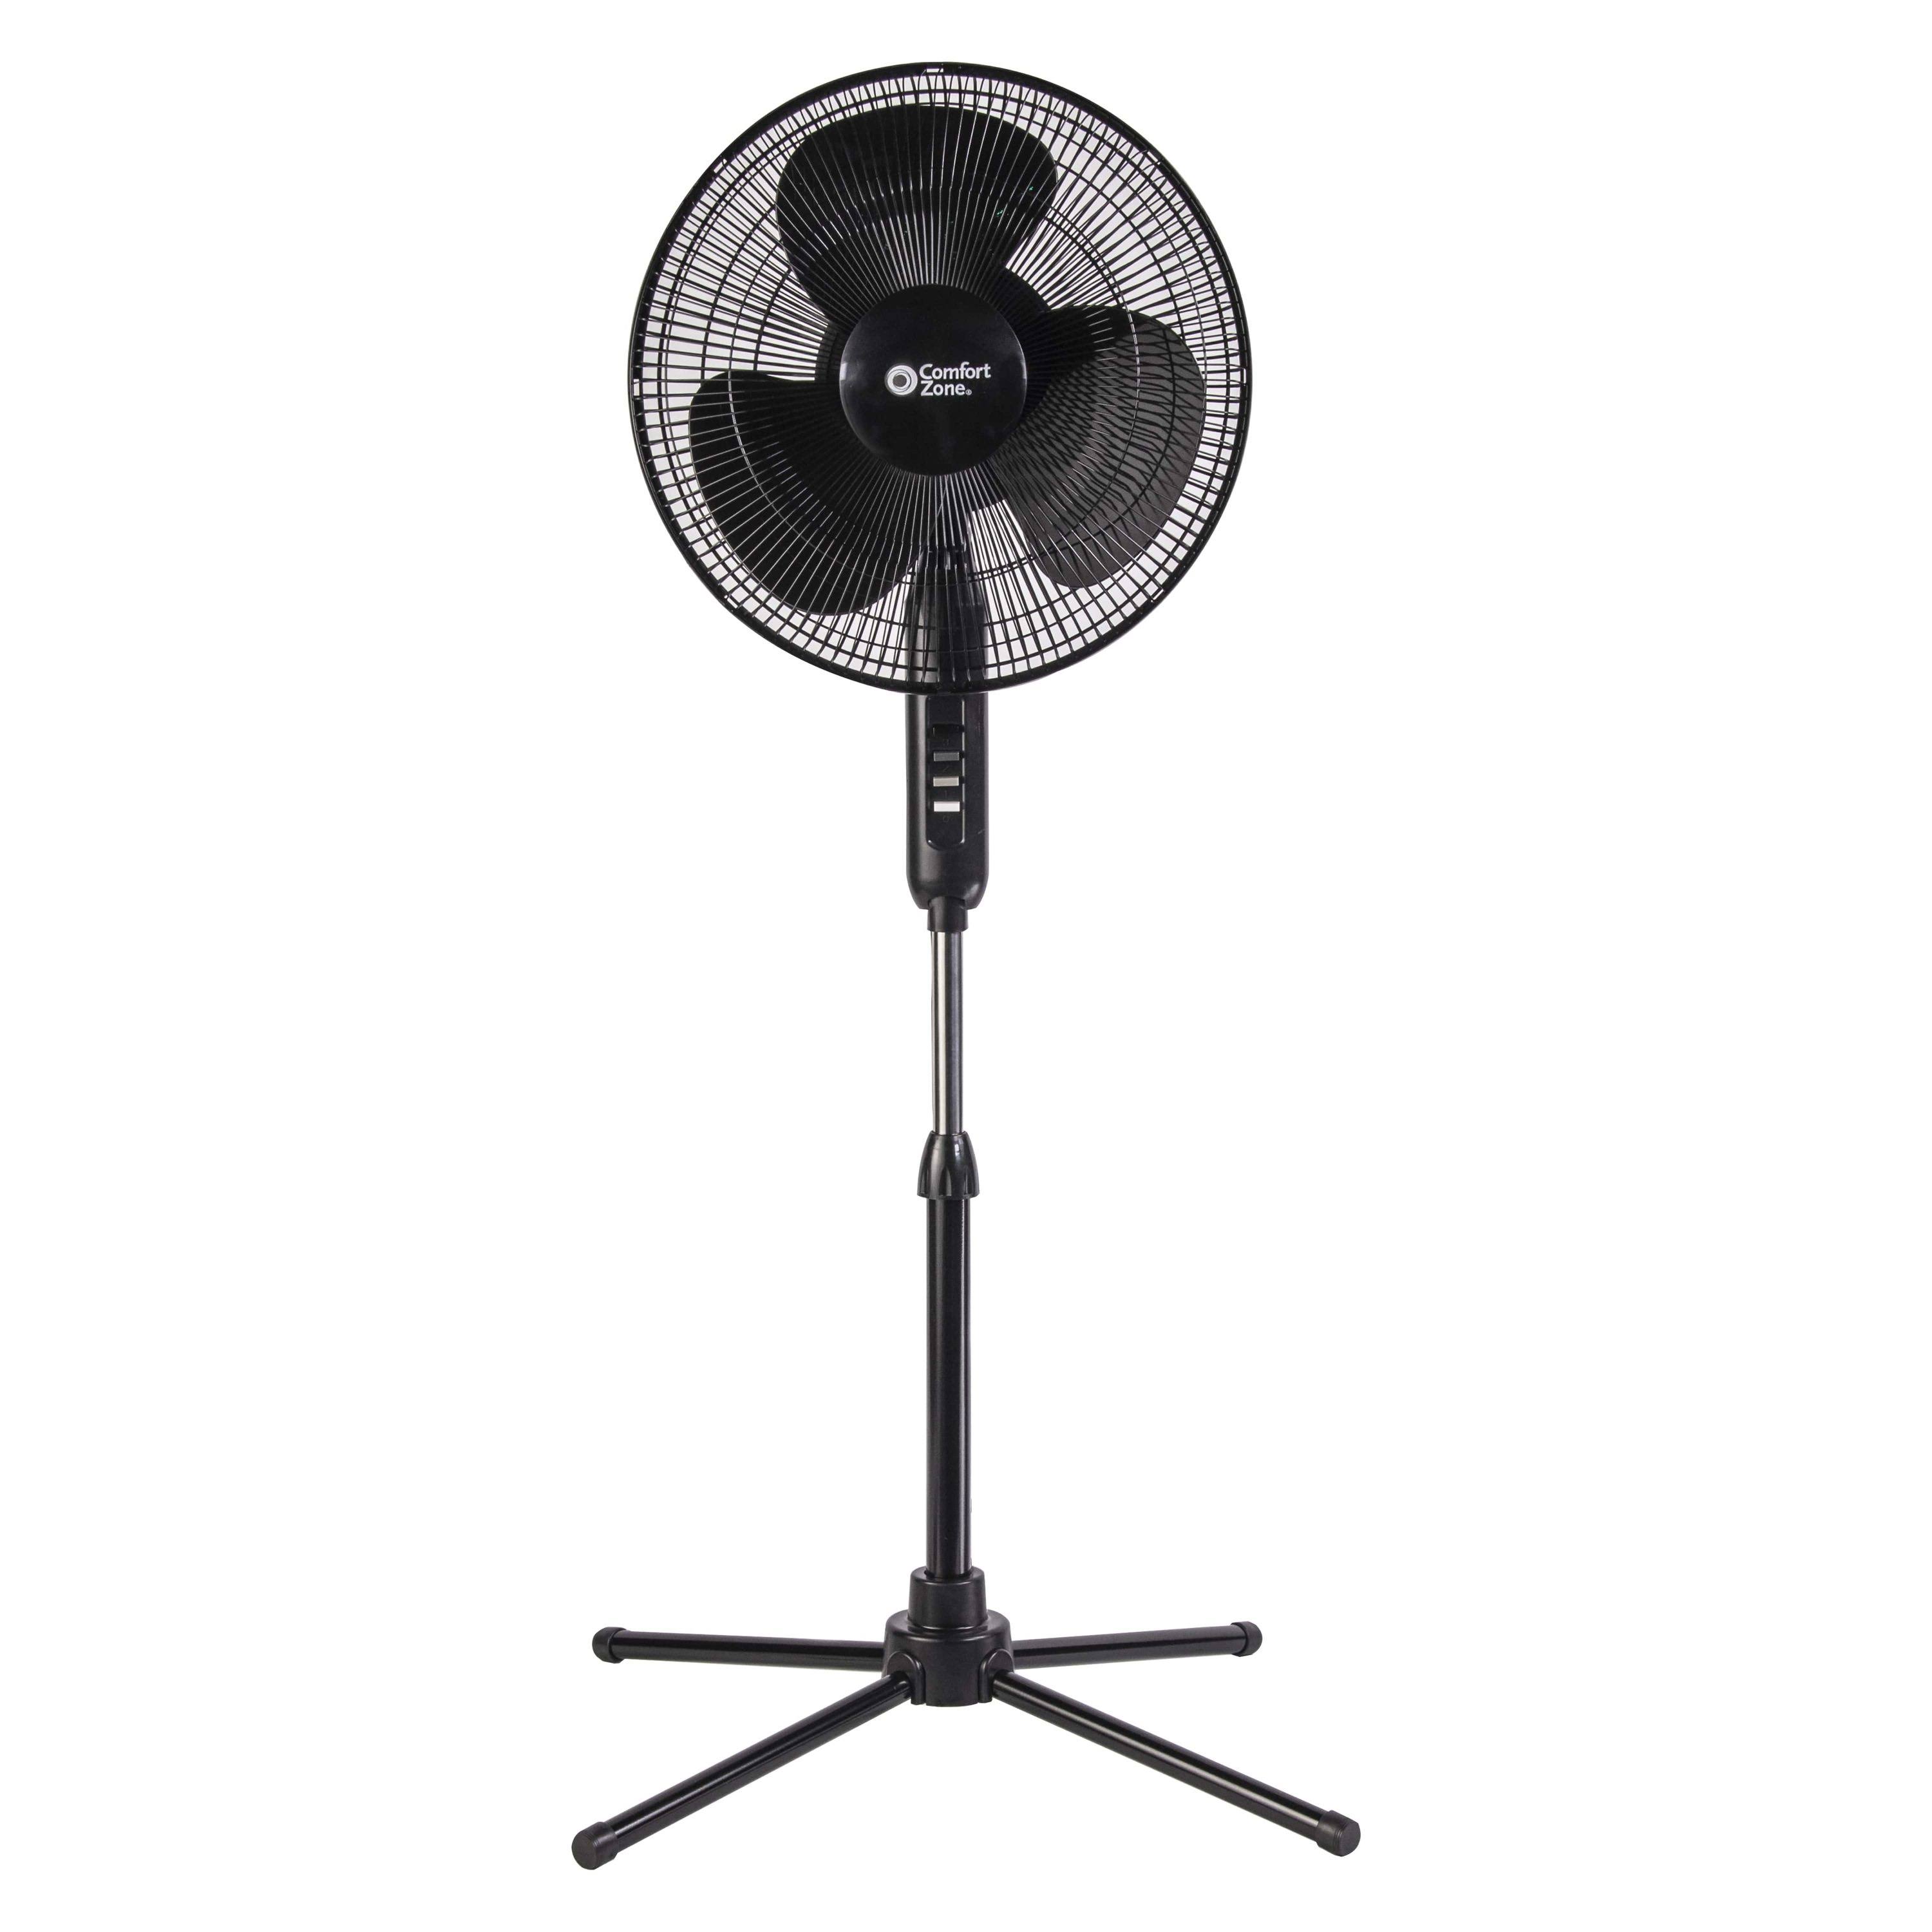 Comfort Zone Oscillating Pedestal Fan - 16", Black, 3 Speed